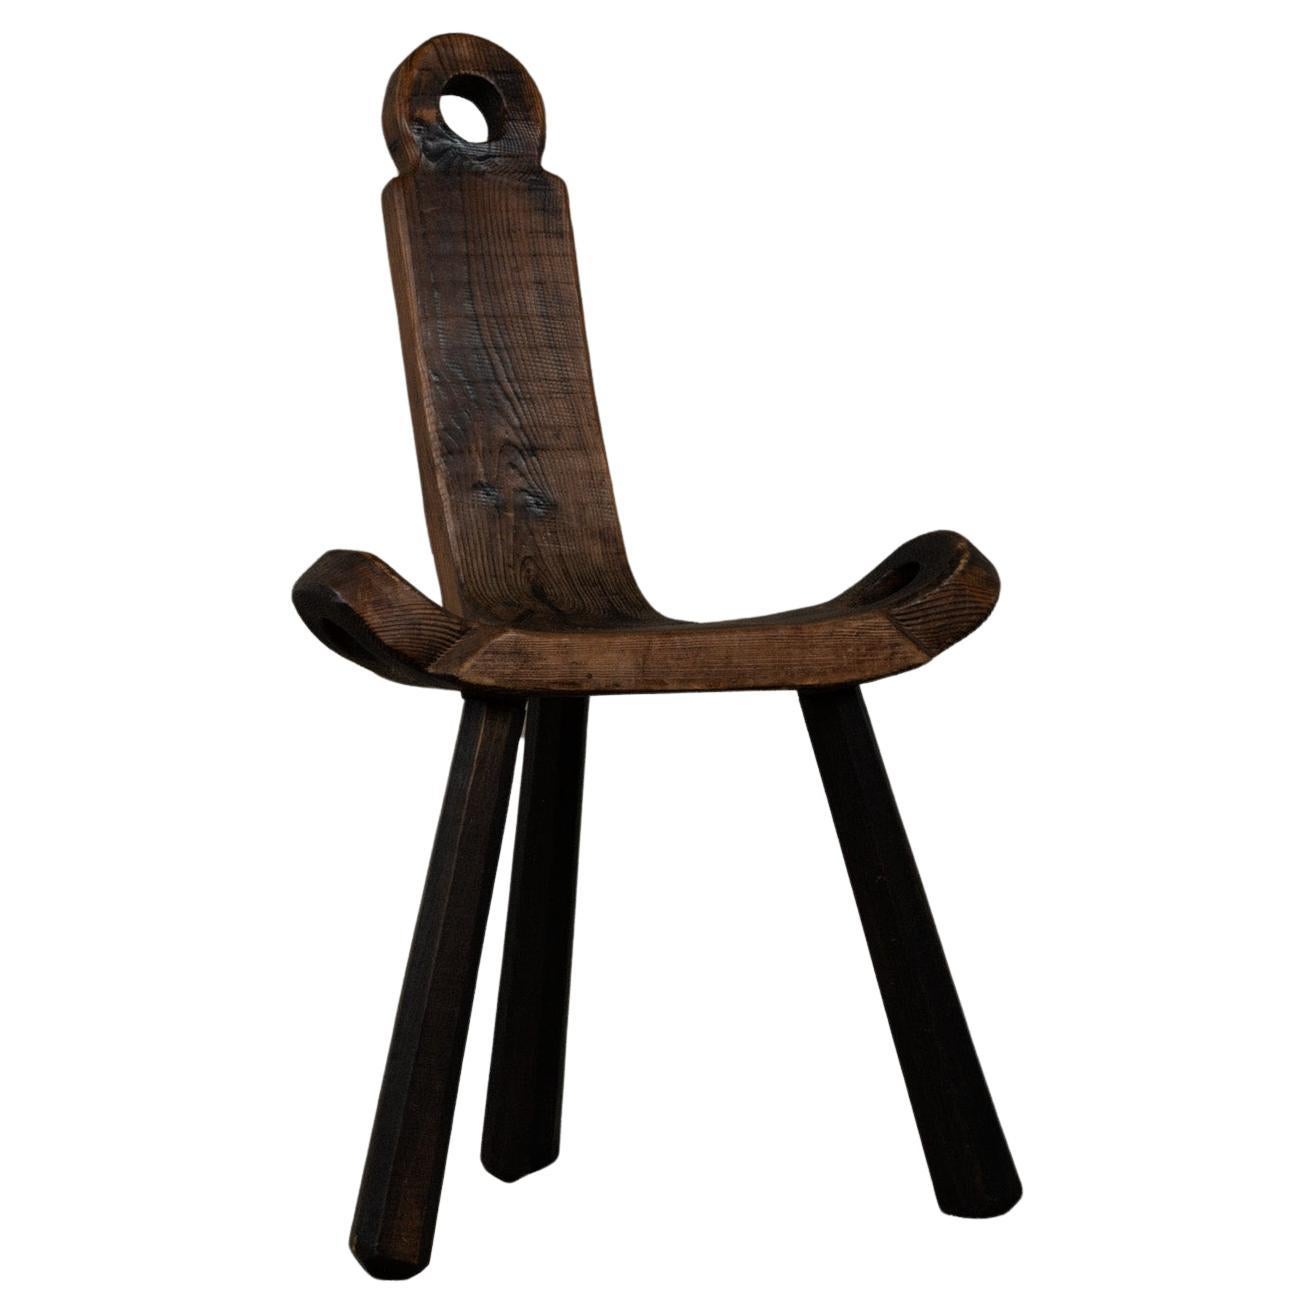 Brutalist Spanish wooden tripod chair